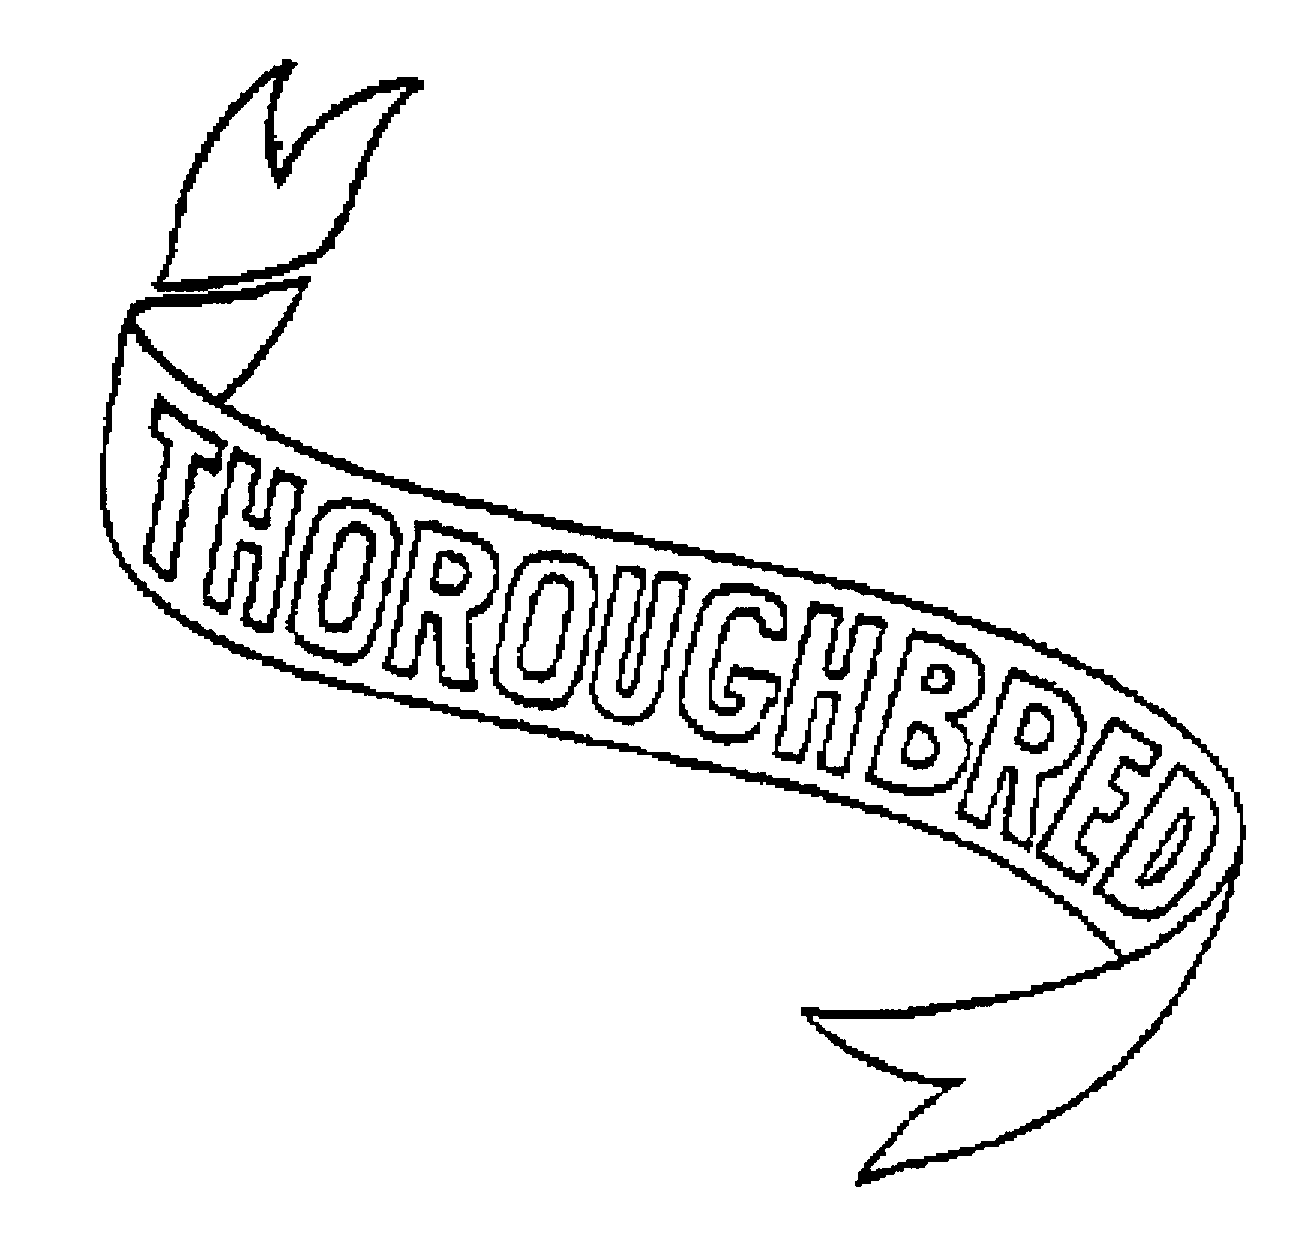 THOROUGHBRED